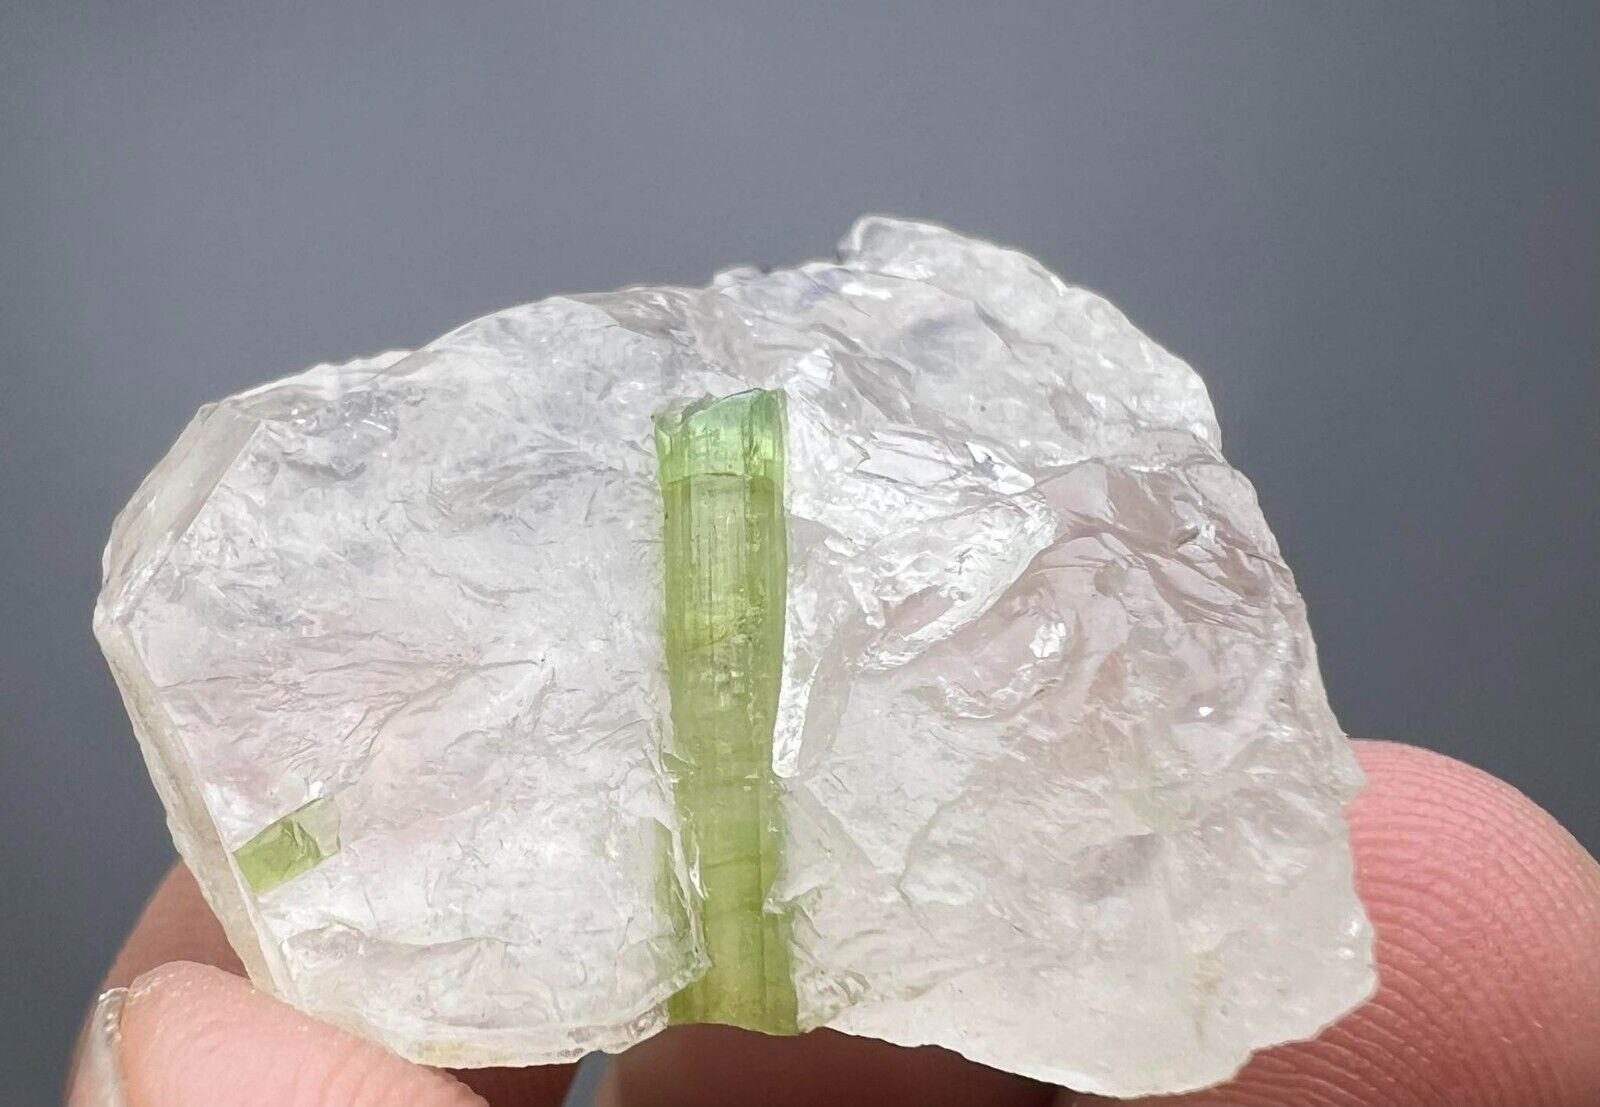 94 CT. Very Beautiful Green Tourmaline Crystal On Quartz Crystal From Kunar AFG